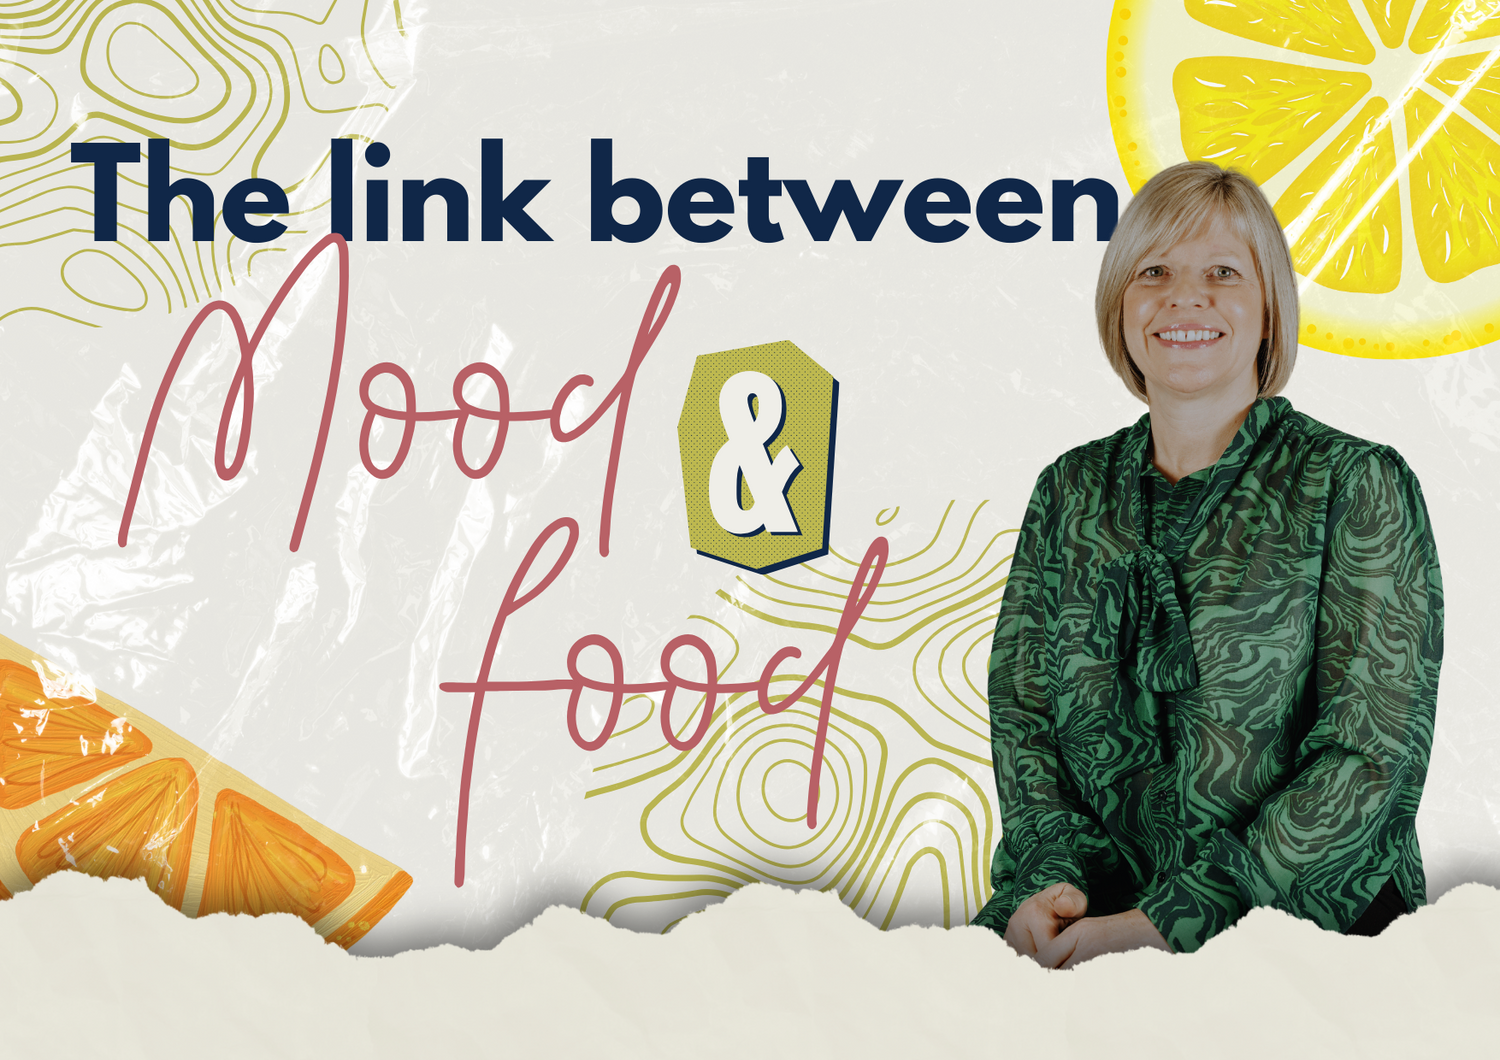 Julie Gough - The link between mood and food!